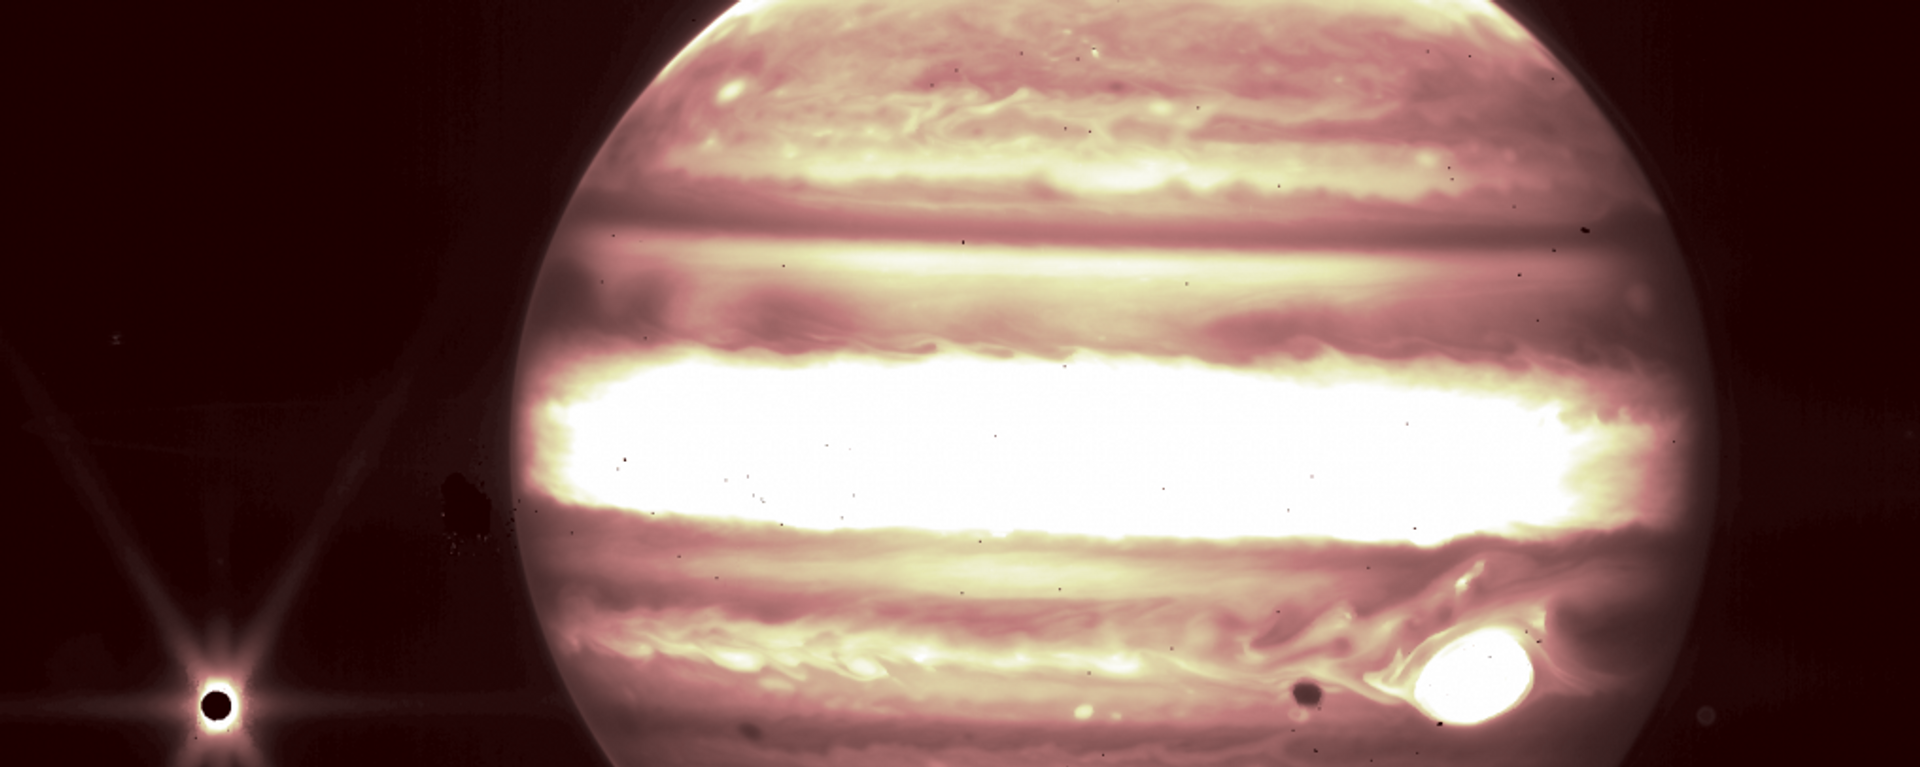 Imágenes del planeta Júpiter tomadas por el telescopio James Webb de la NASA - Sputnik Mundo, 1920, 15.07.2022